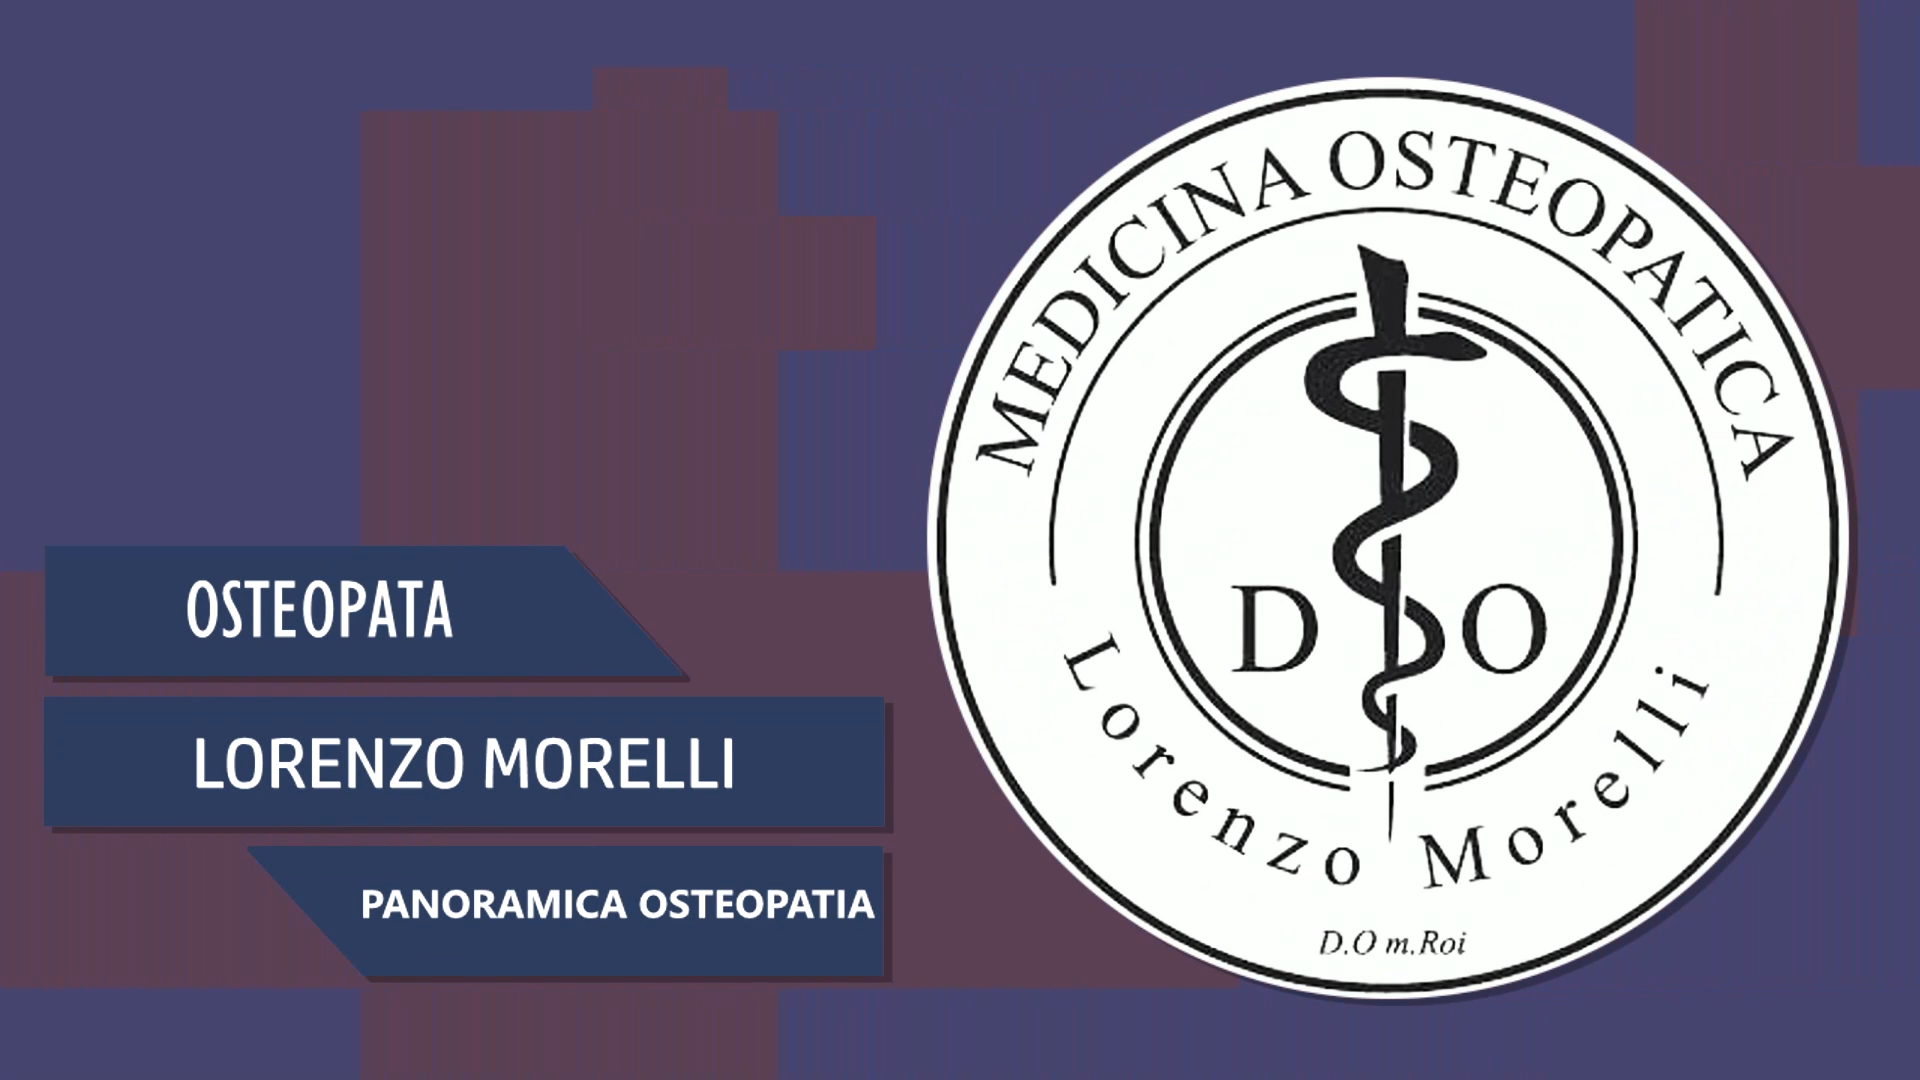 Intervista al Dott. Lorenzo Morelli – Panoramica Osteopatia